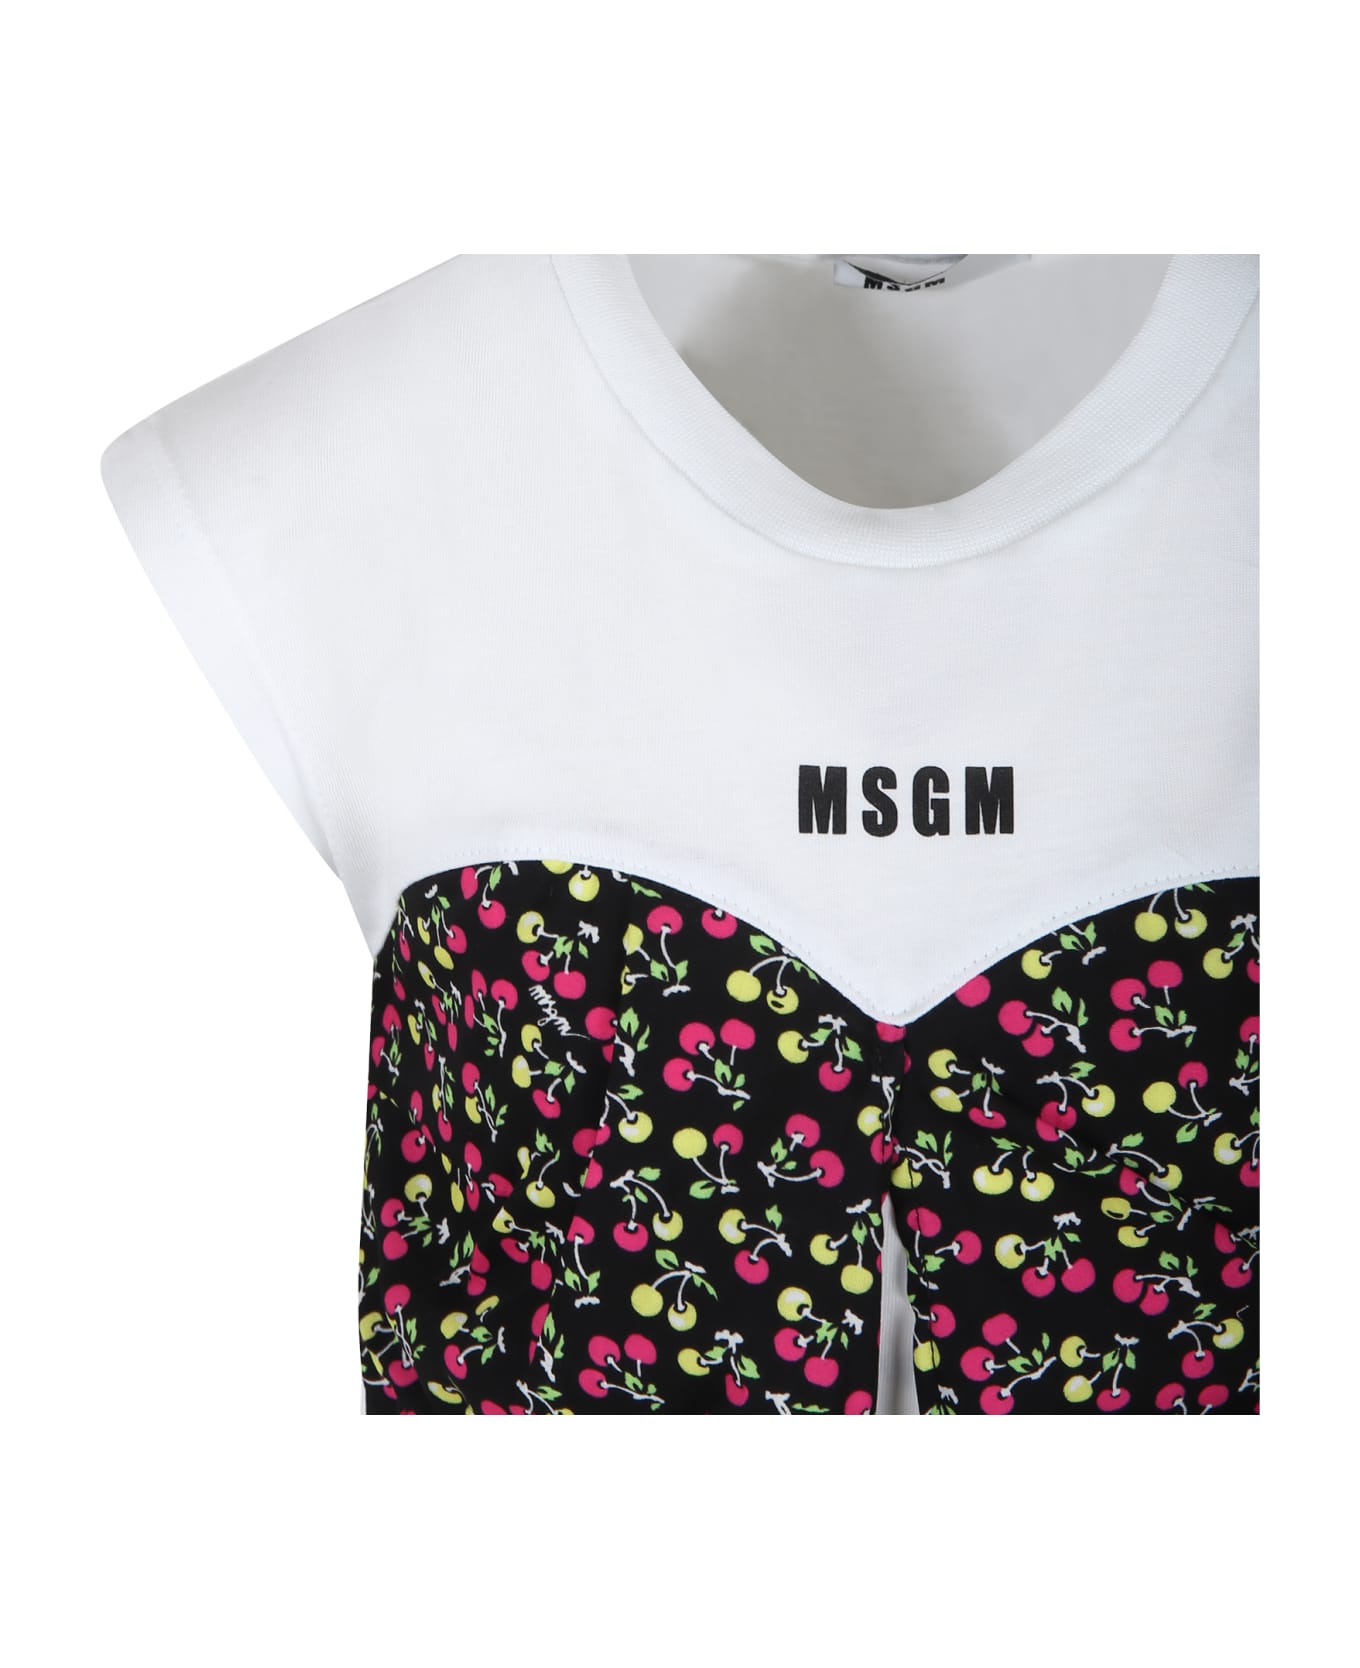 MSGM White T-shirt For Girl With Cherryprint - White